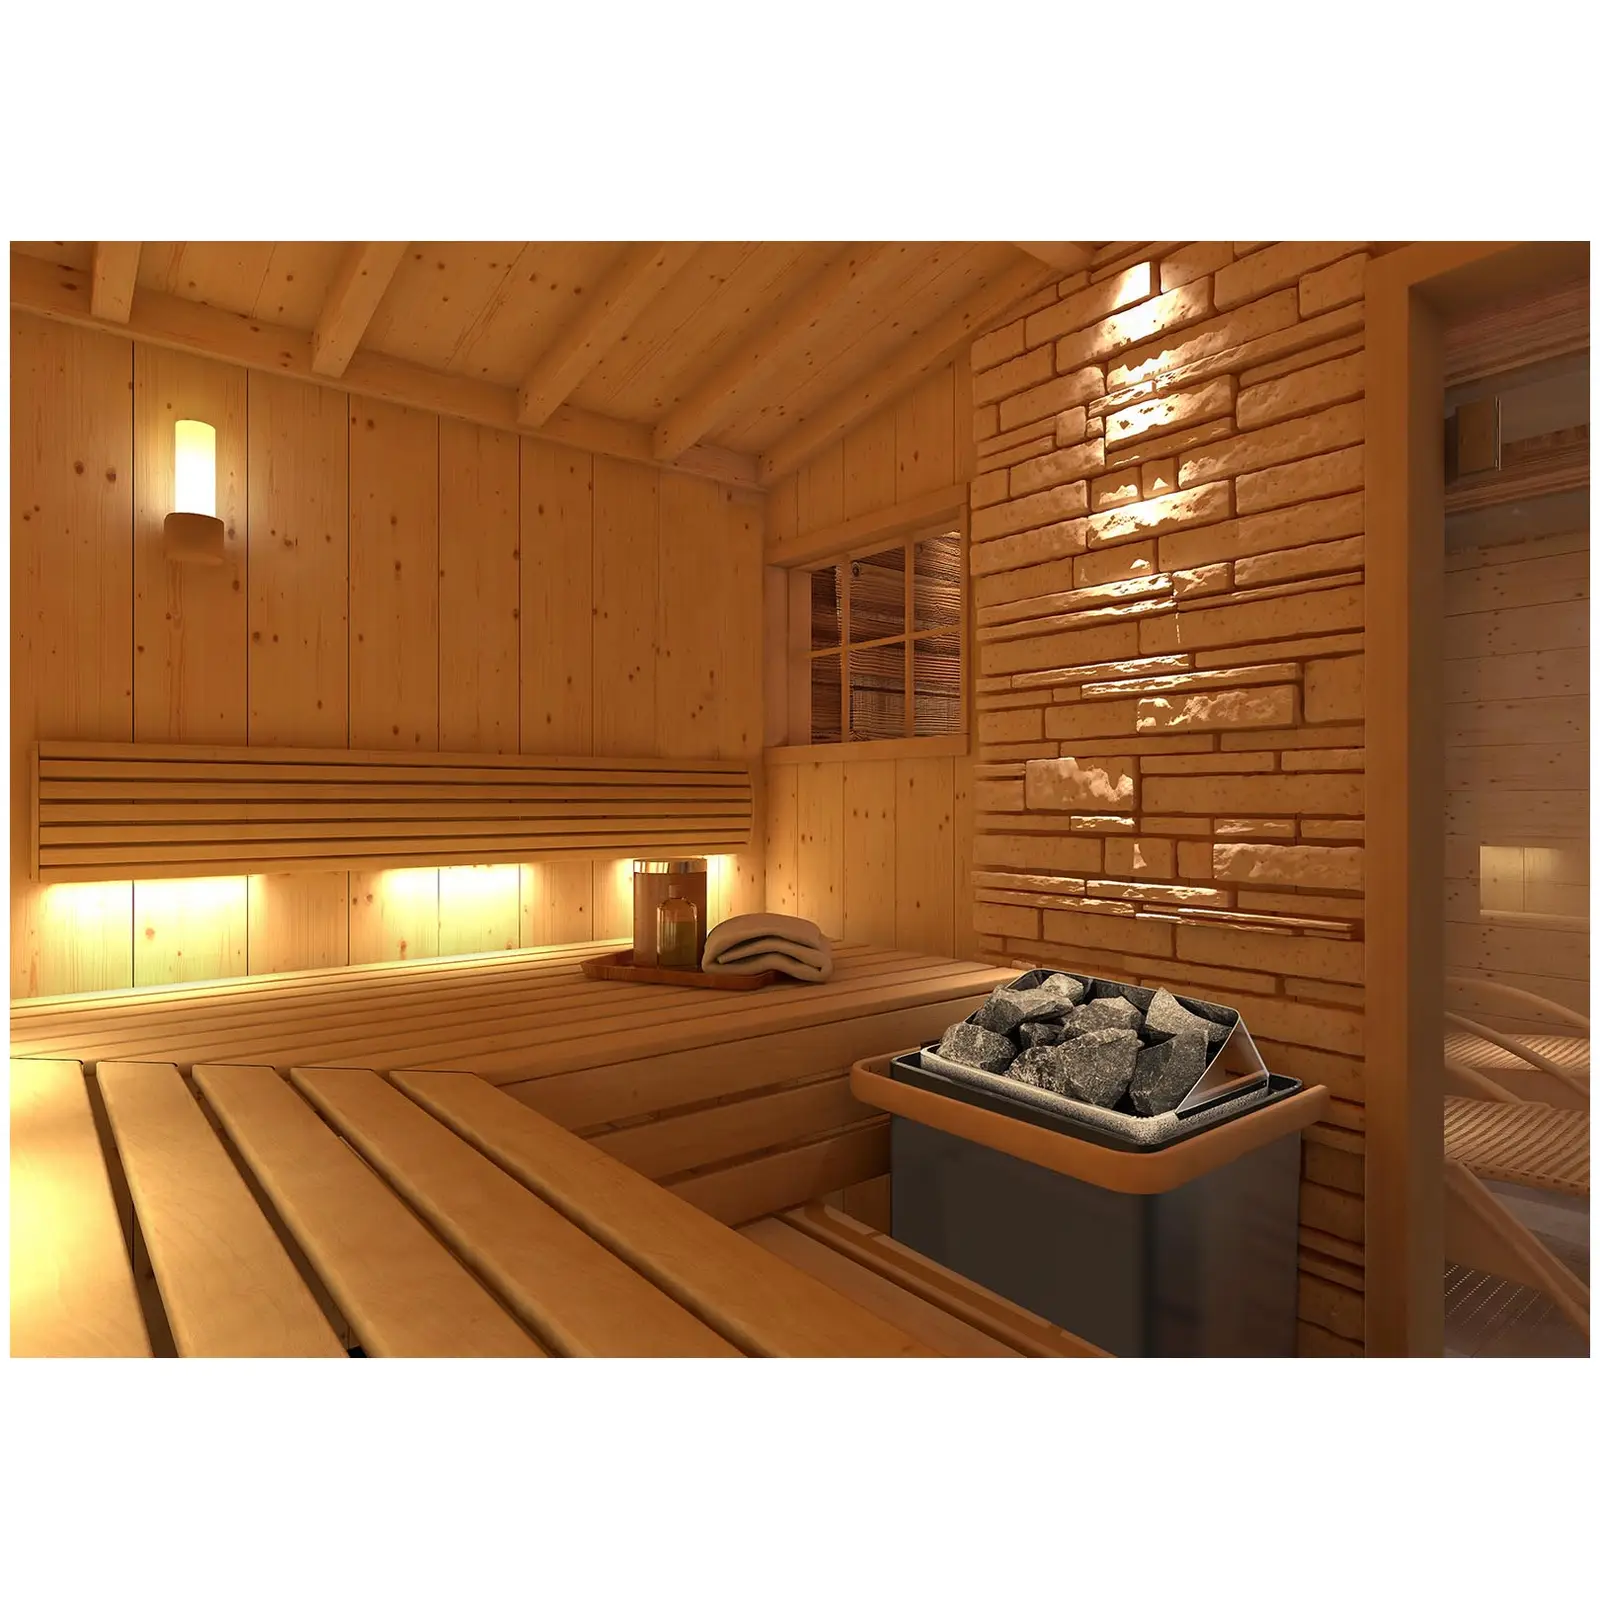 Aquecedor para sauna - elétrico - 4,5 kW